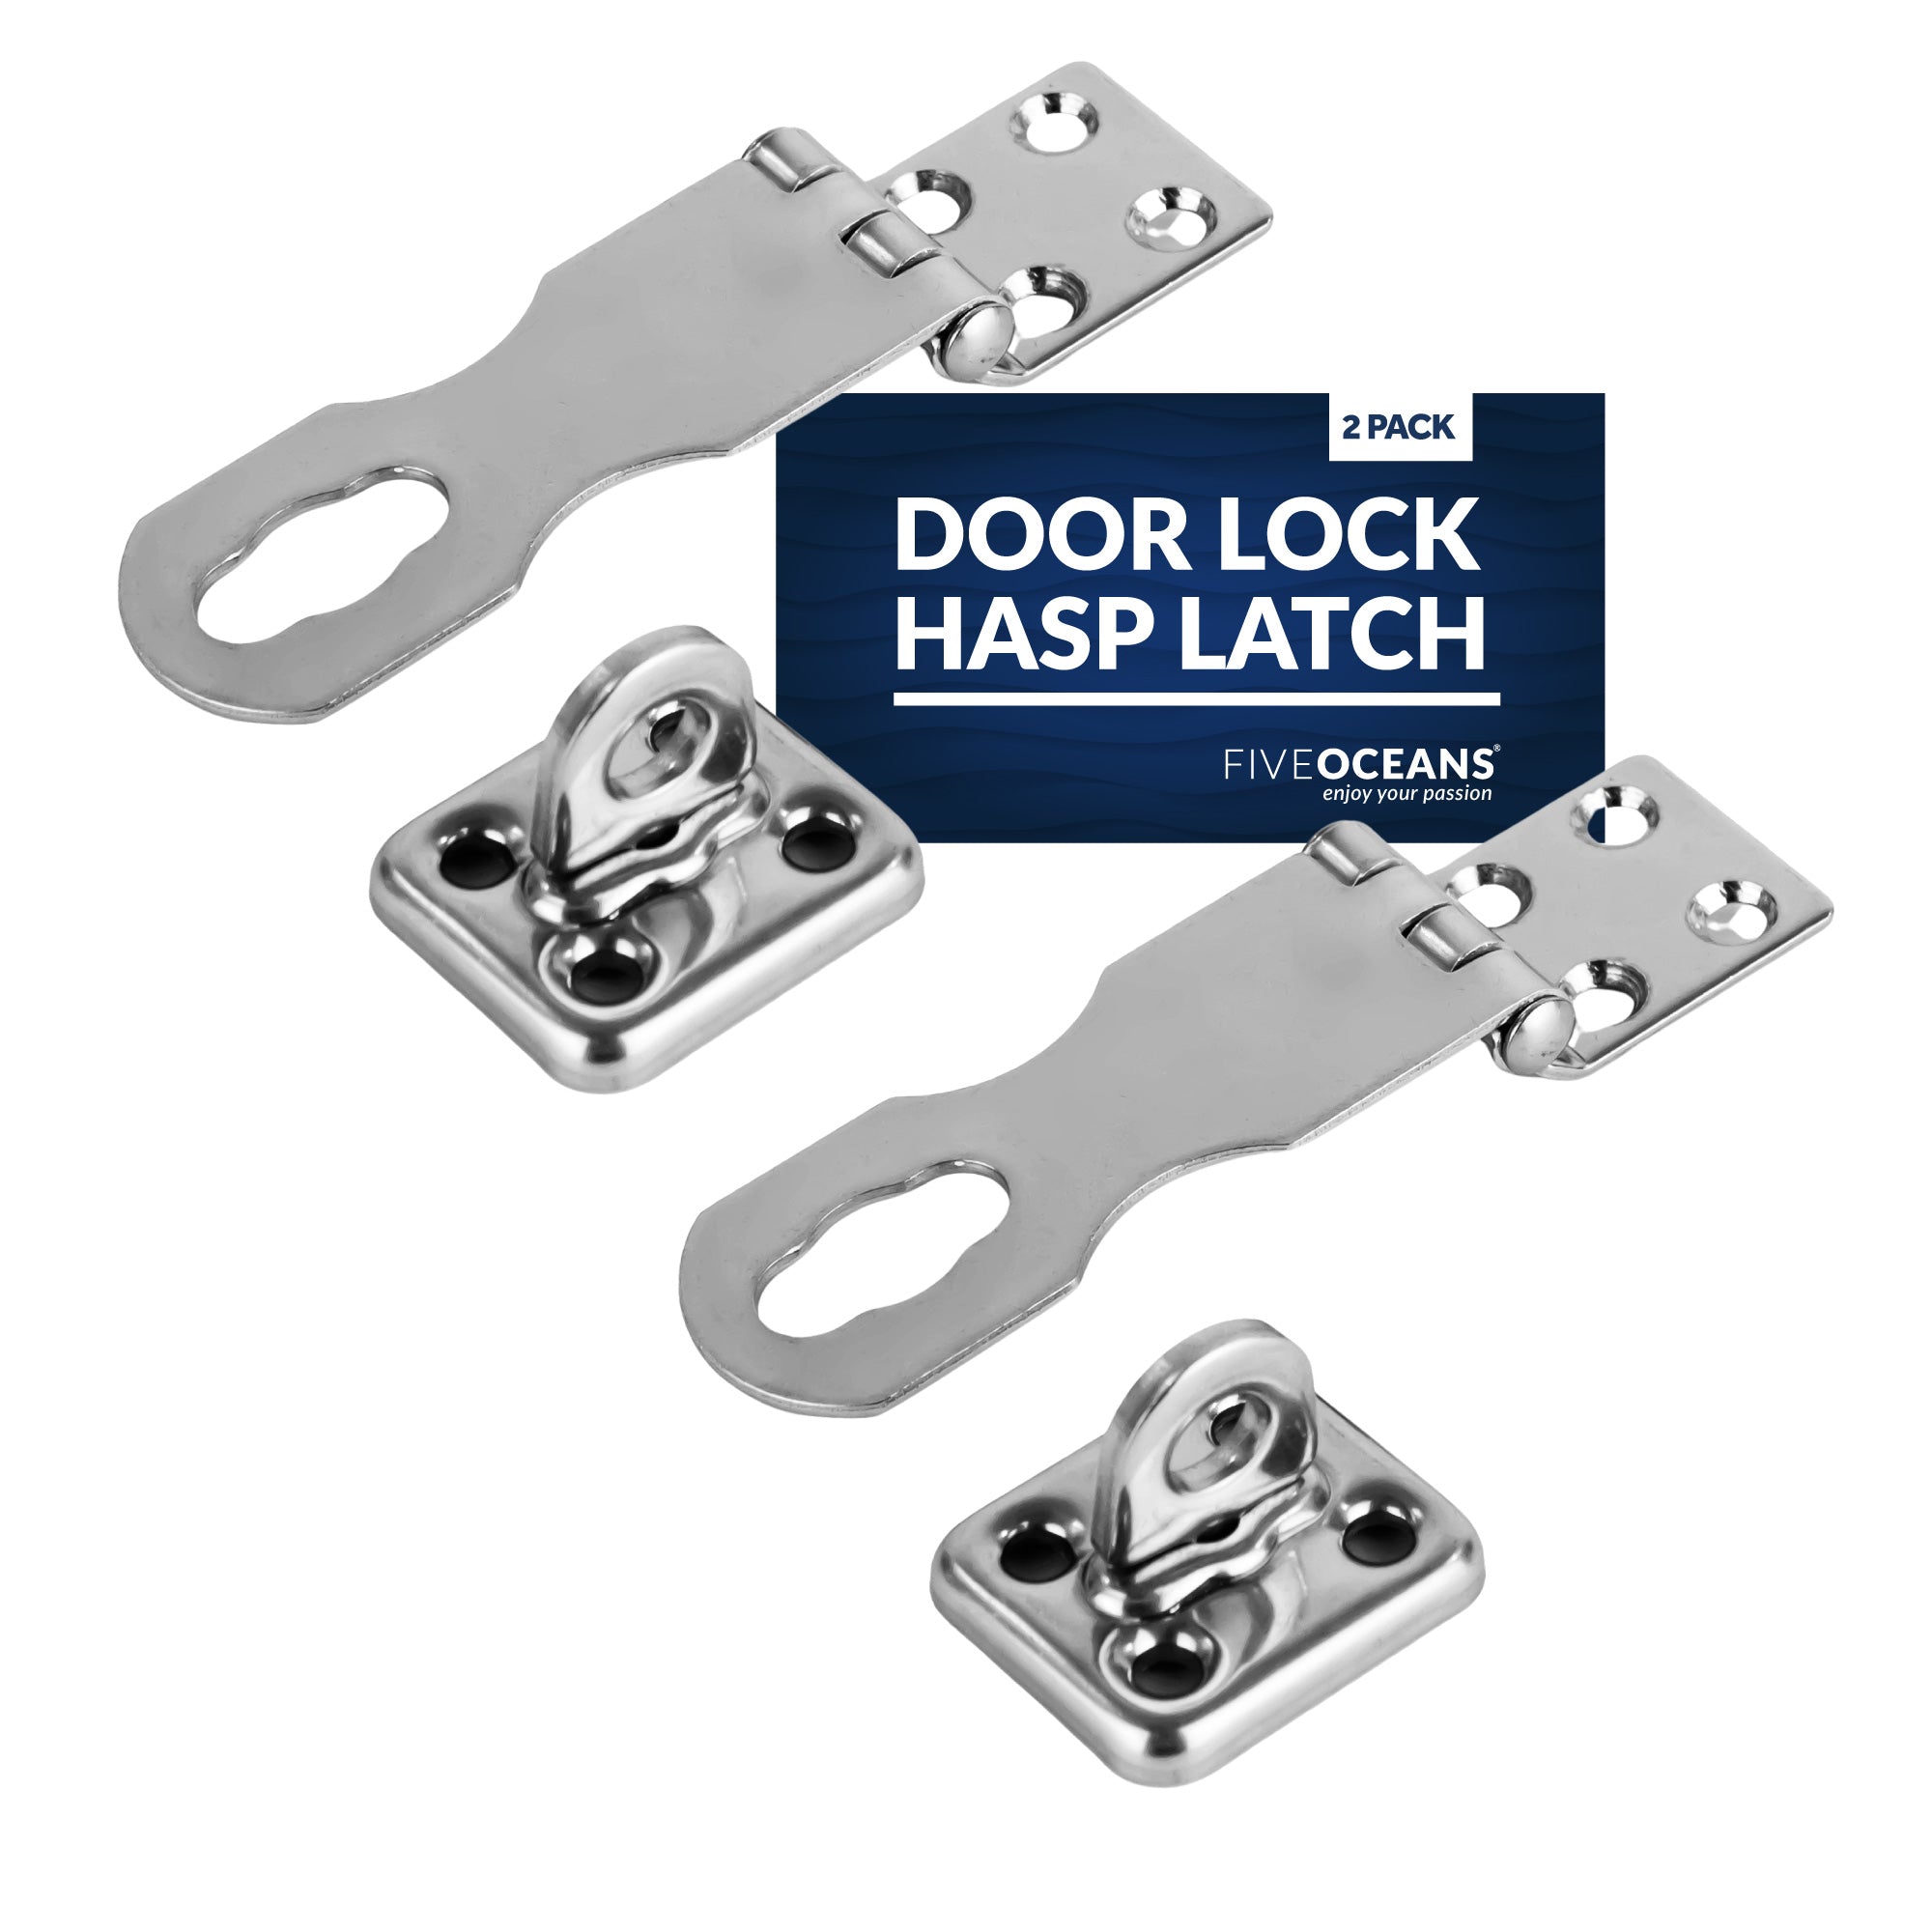 Door Lock Hasp Latch, Stainless Steel, 2-Pack - FO2883-M2